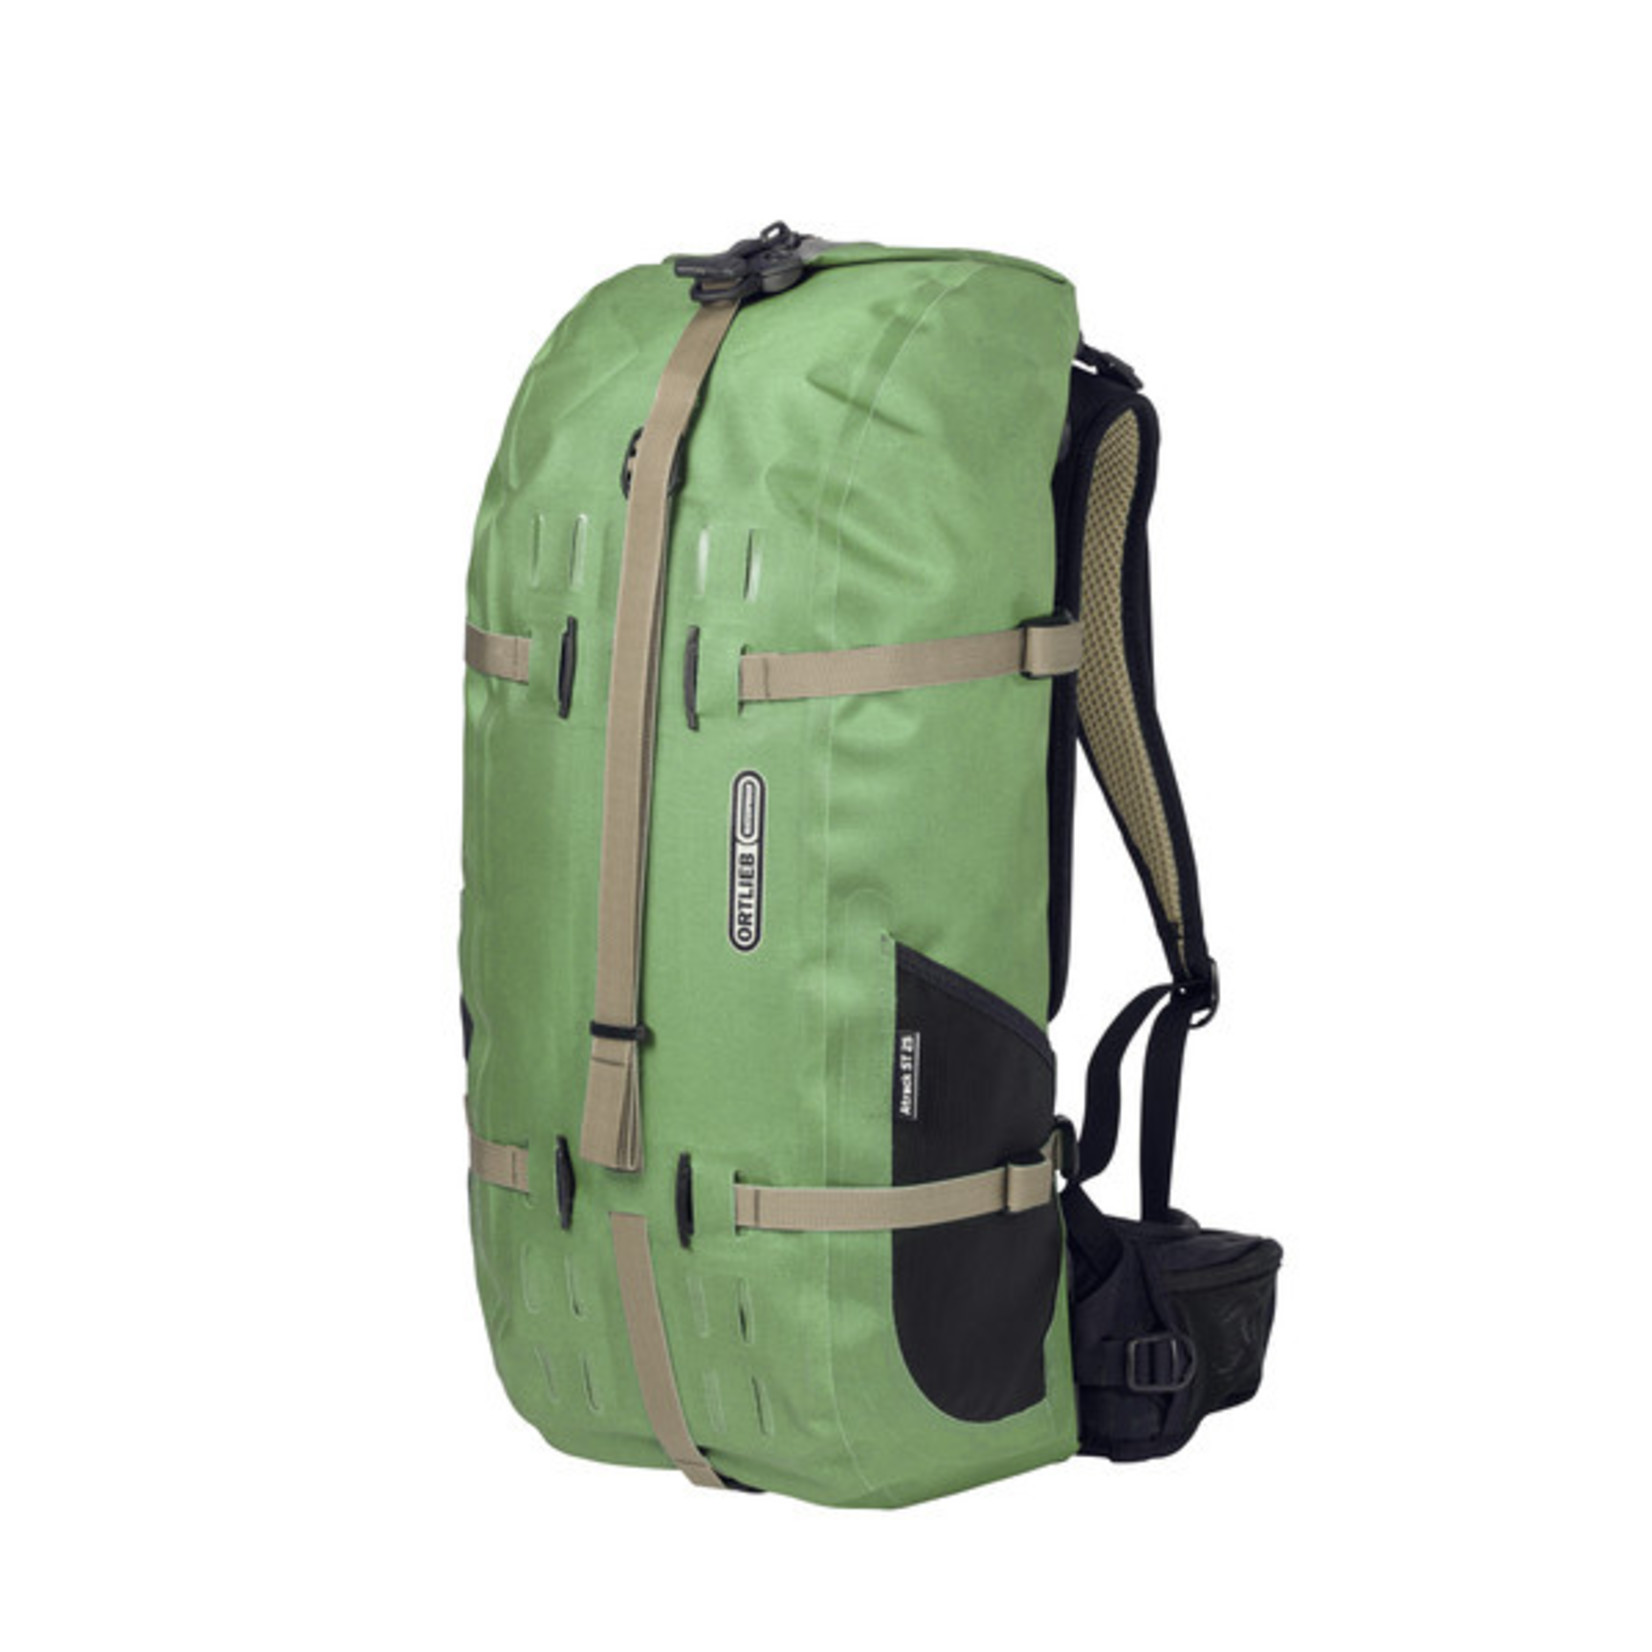 Ortlieb Ortlieb Atrack ST Waterproof Backpack Bag R7034 - 25L Pistachio